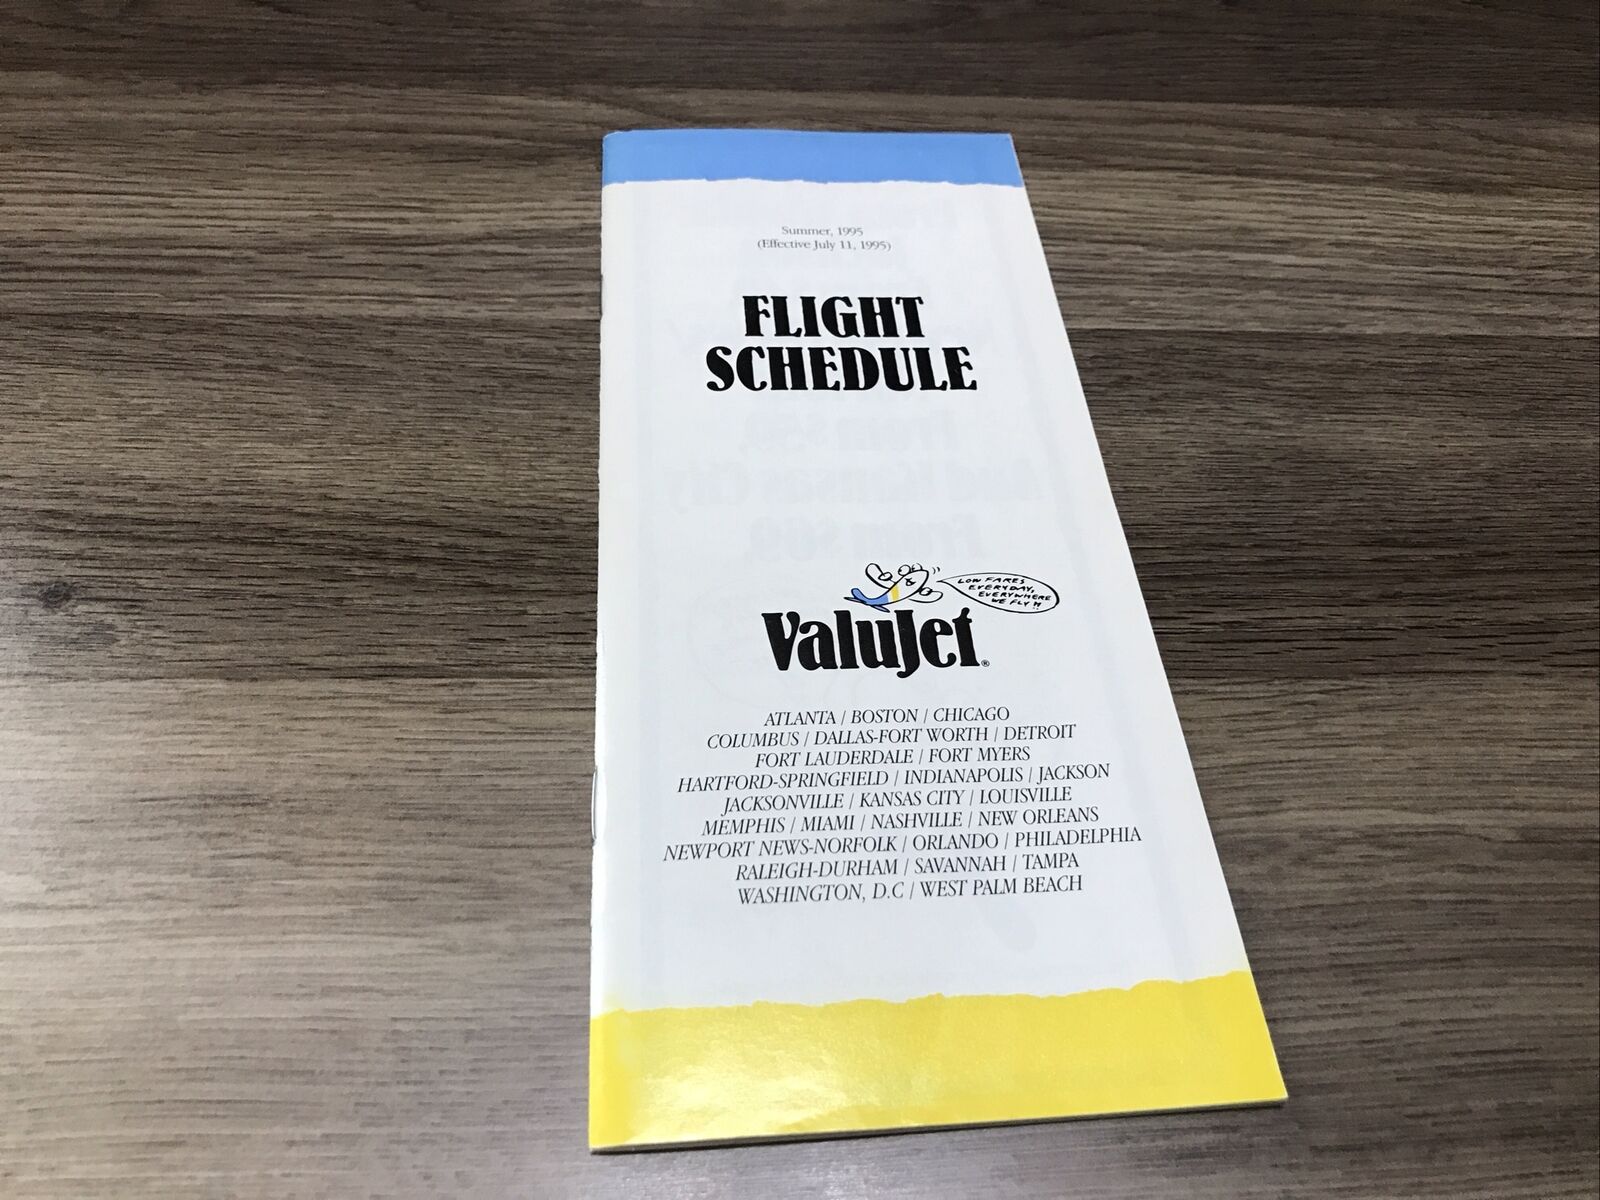 Valujet Airlines Flight Schedule July 11, 1995